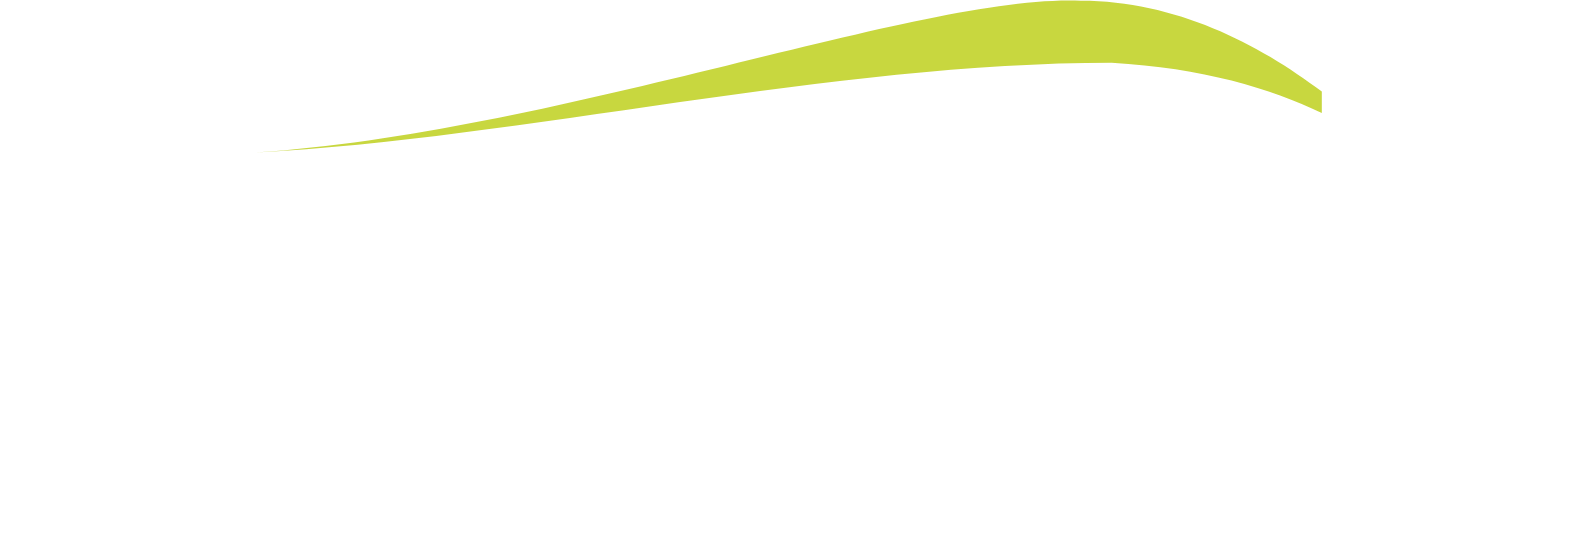 Northeast Bank Logo groß für dunkle Hintergründe (transparentes PNG)